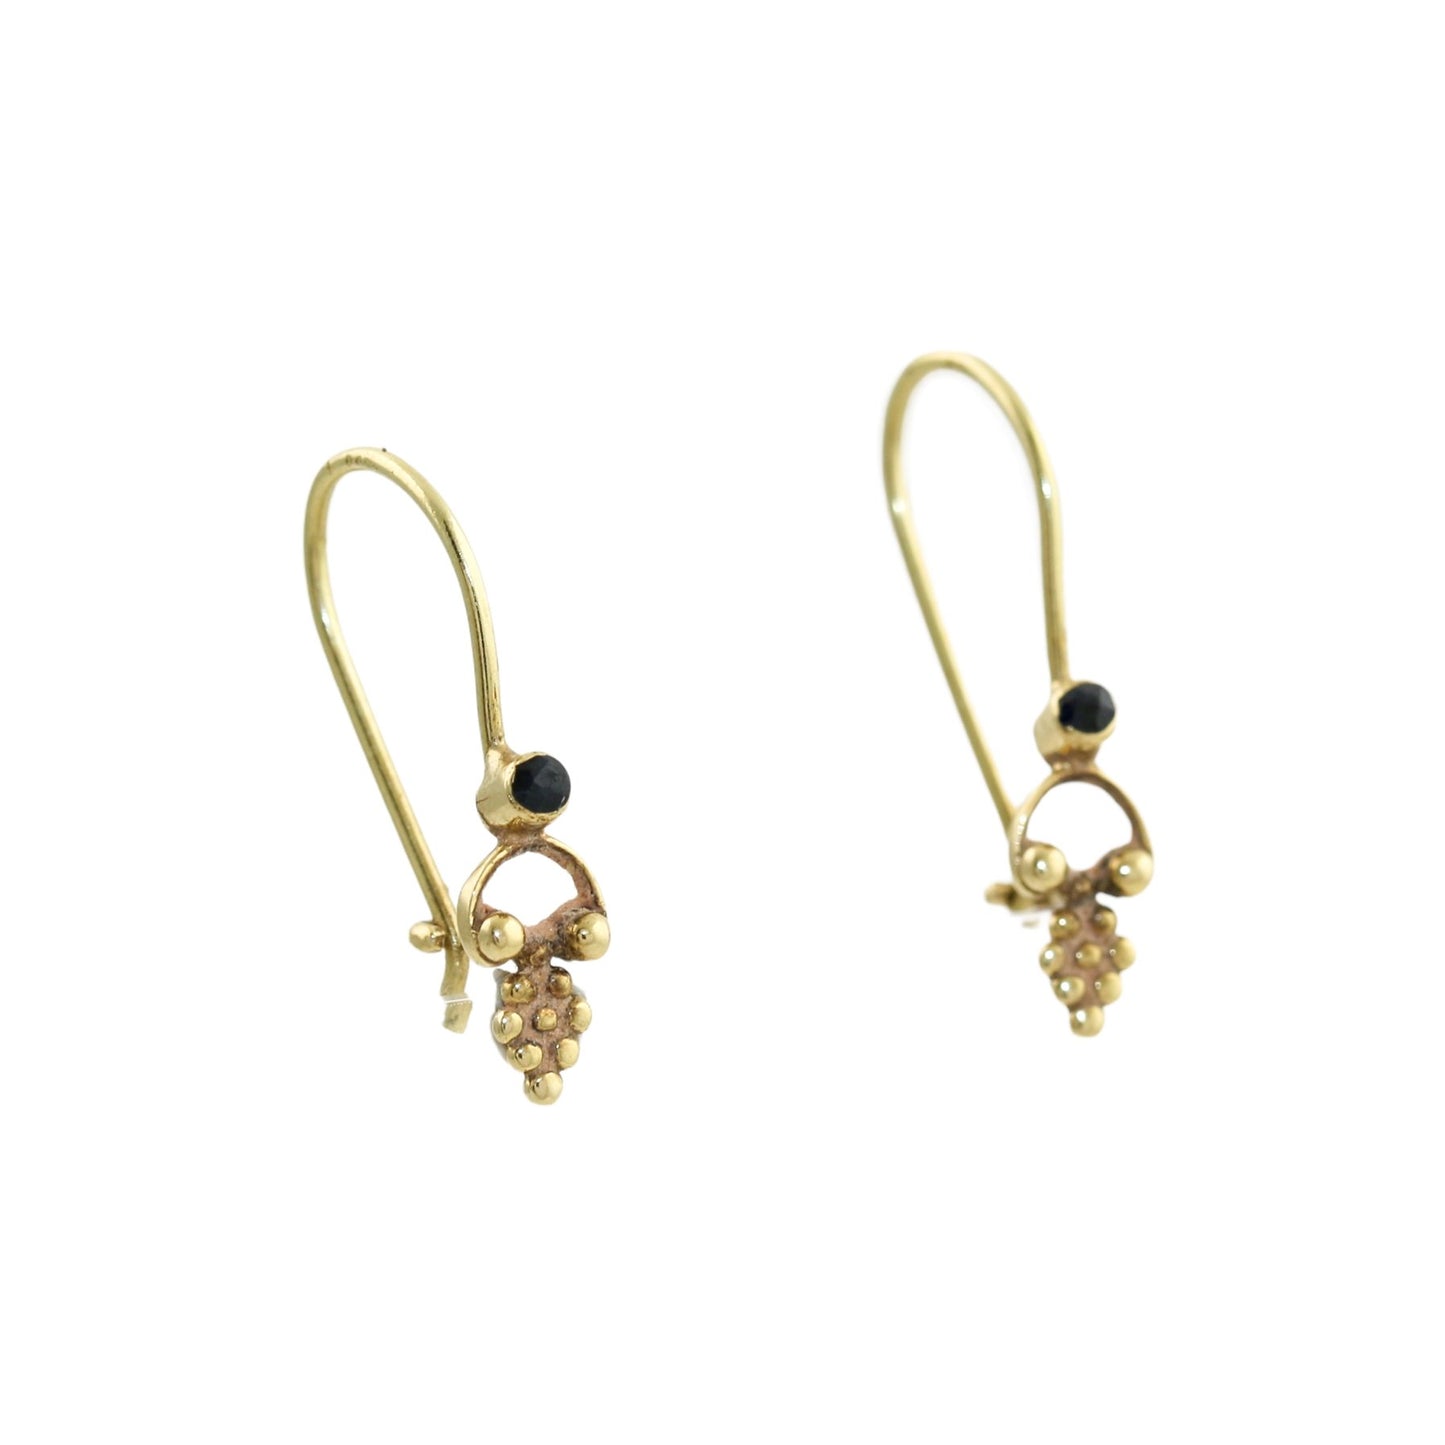 Sapphie Tiny Gold Earrings - Kingdom Jewelry